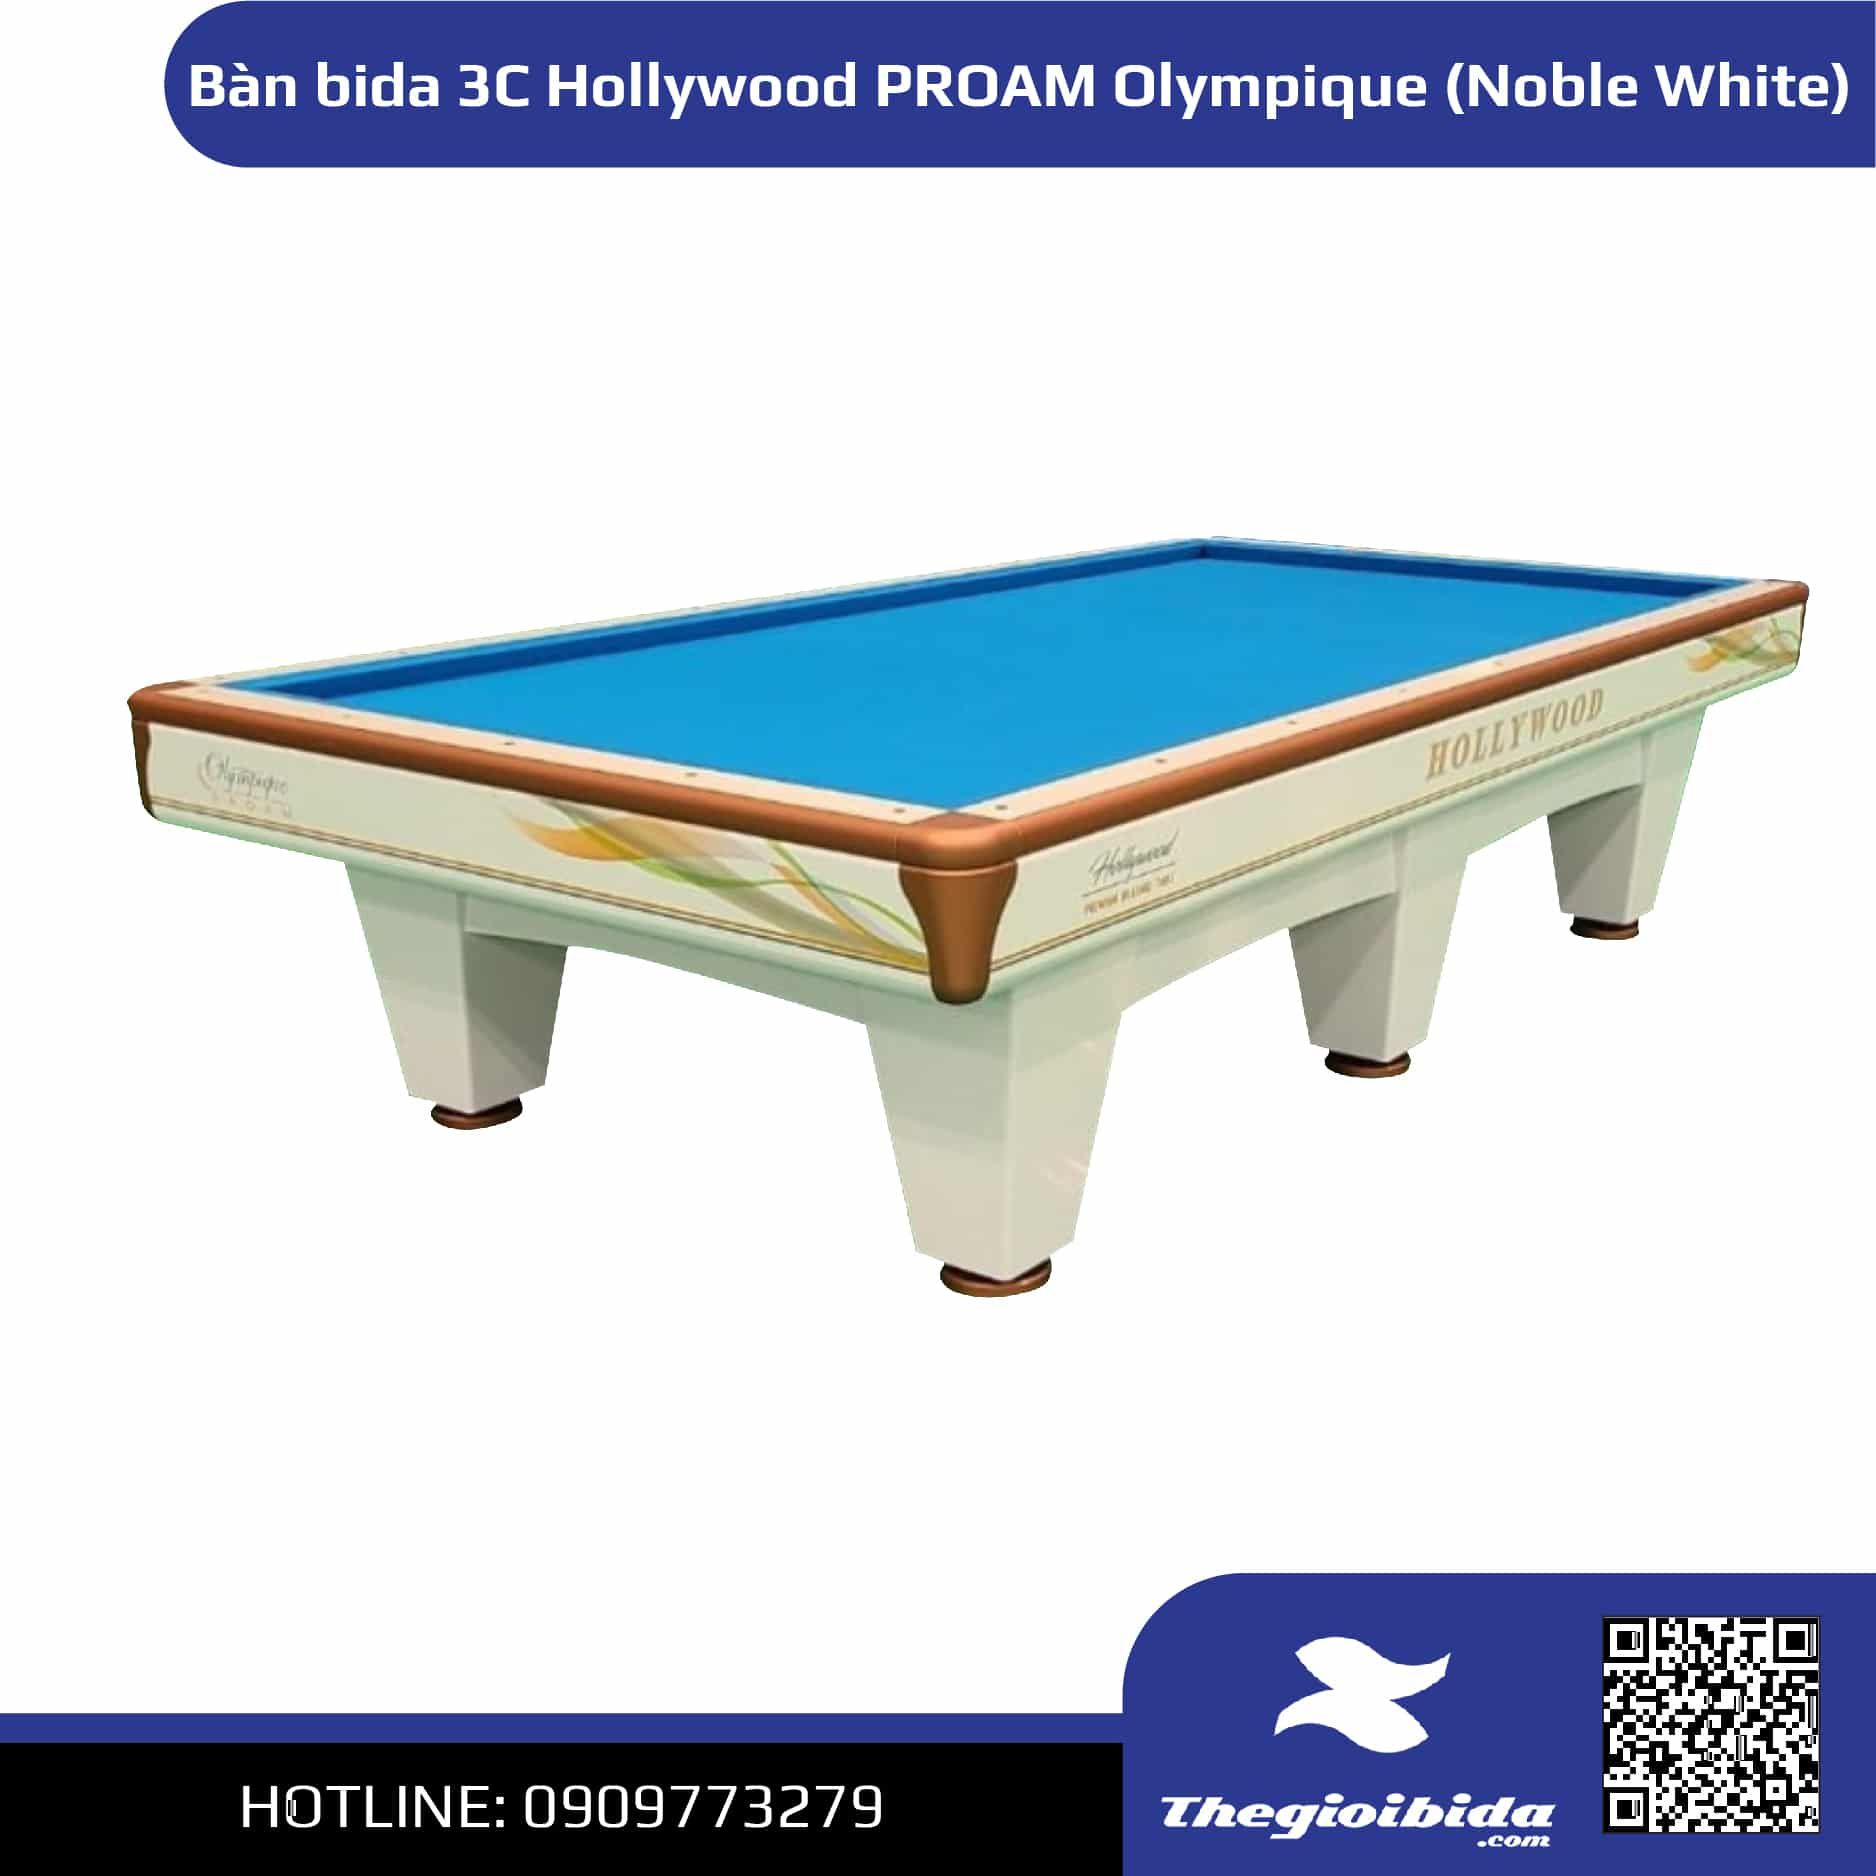 Bàn bida 3C Hollywood PROAM Olympique (Noble White) - Giá: 215.000.000đ